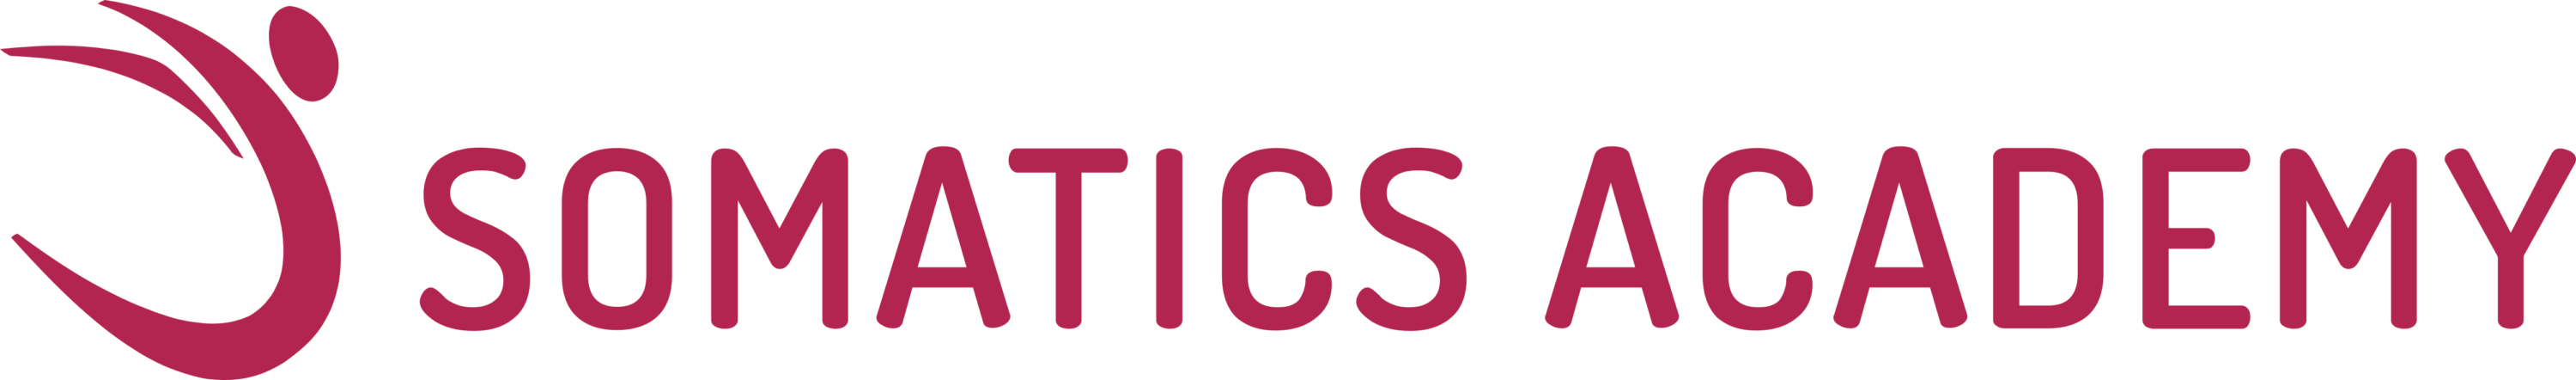 Somatic Academy Logo